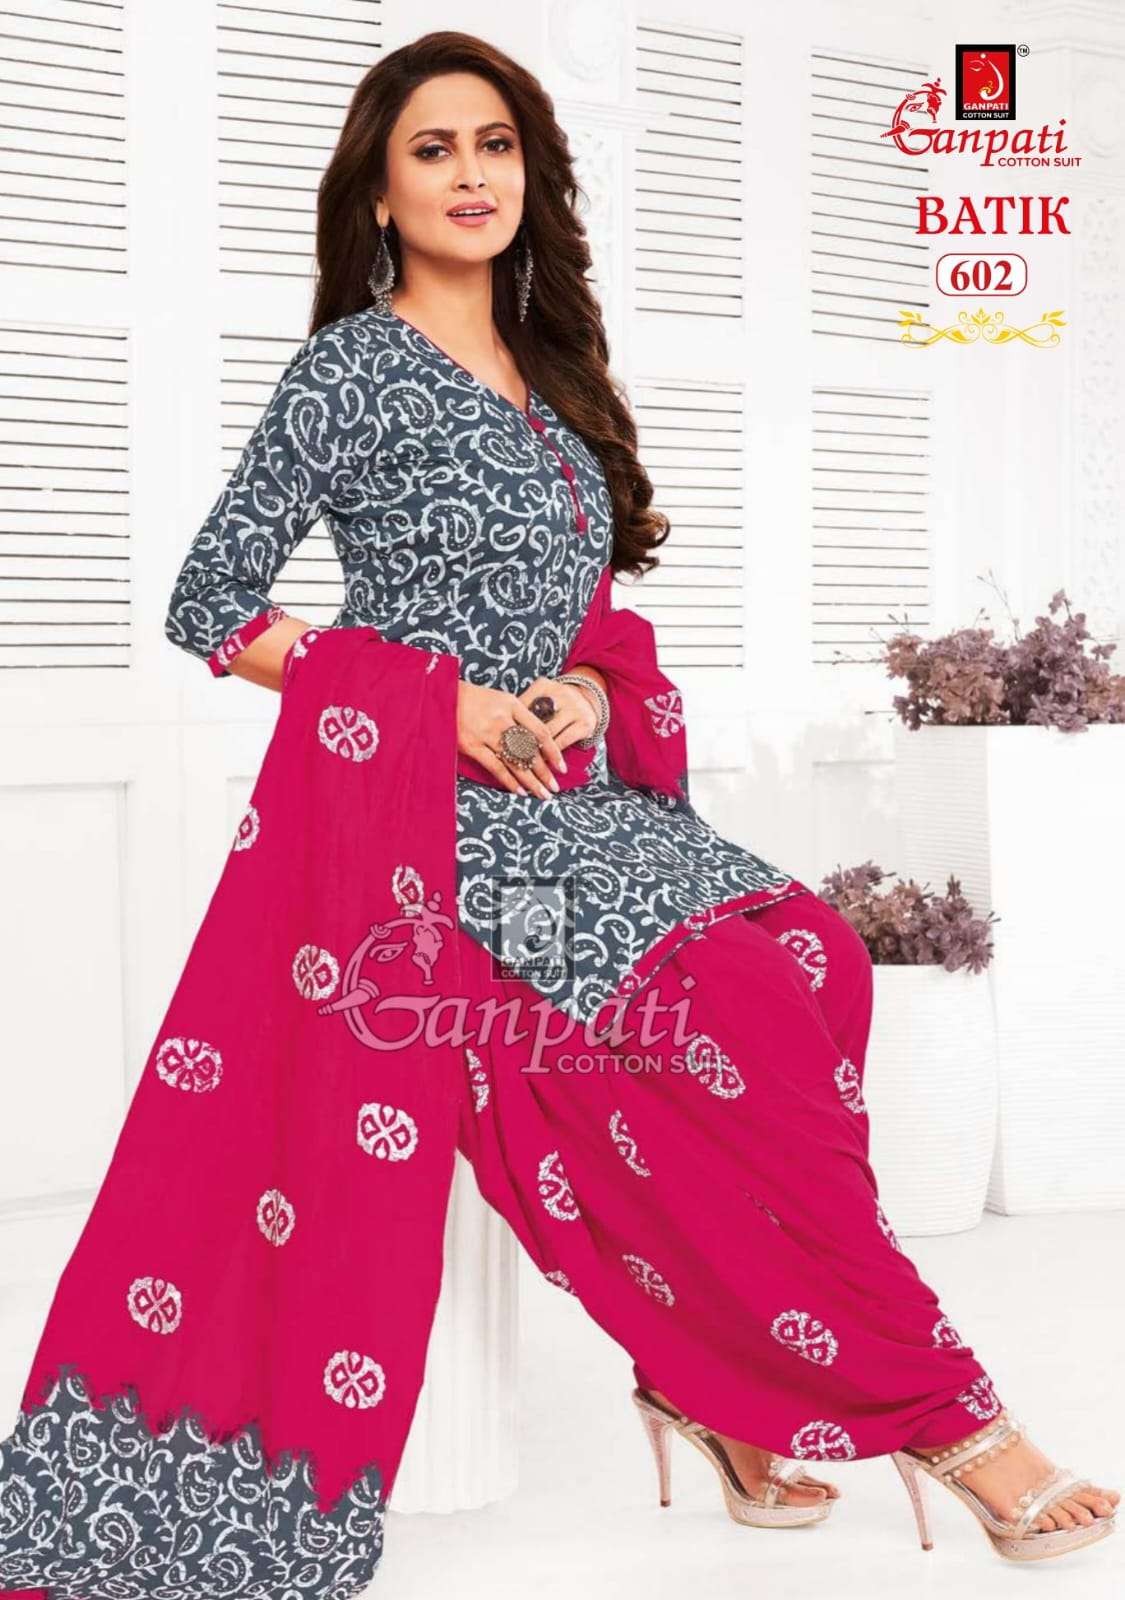 ganpati cotton suit batik vol-6 601-615 series punjabi style designer salwar suits catalogue manufacturer surat 